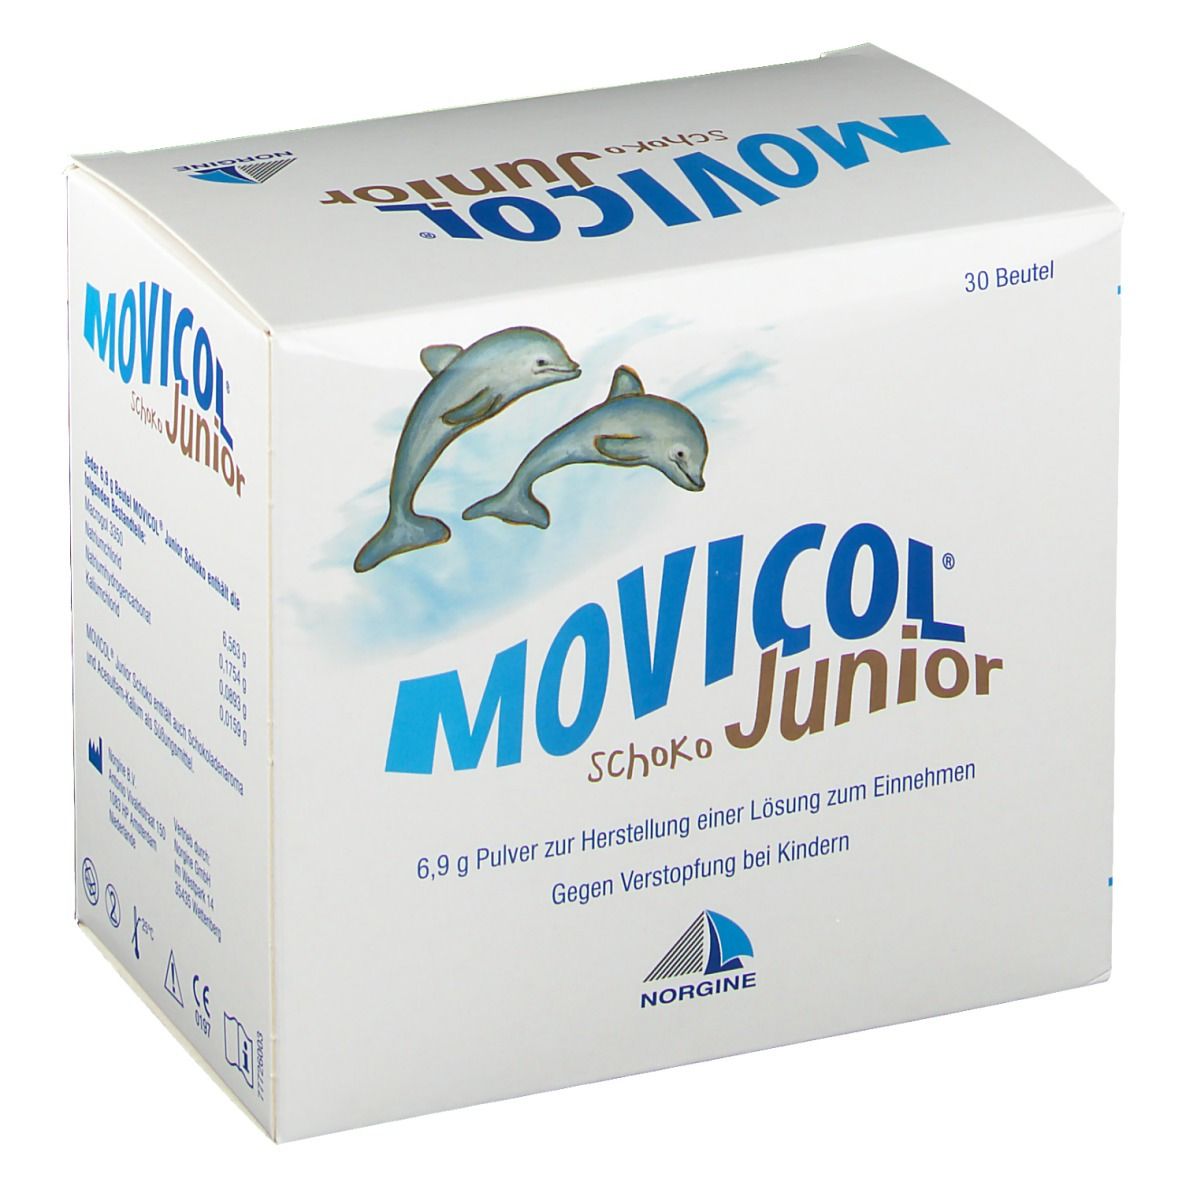 MOVICOL® Junior Schoko